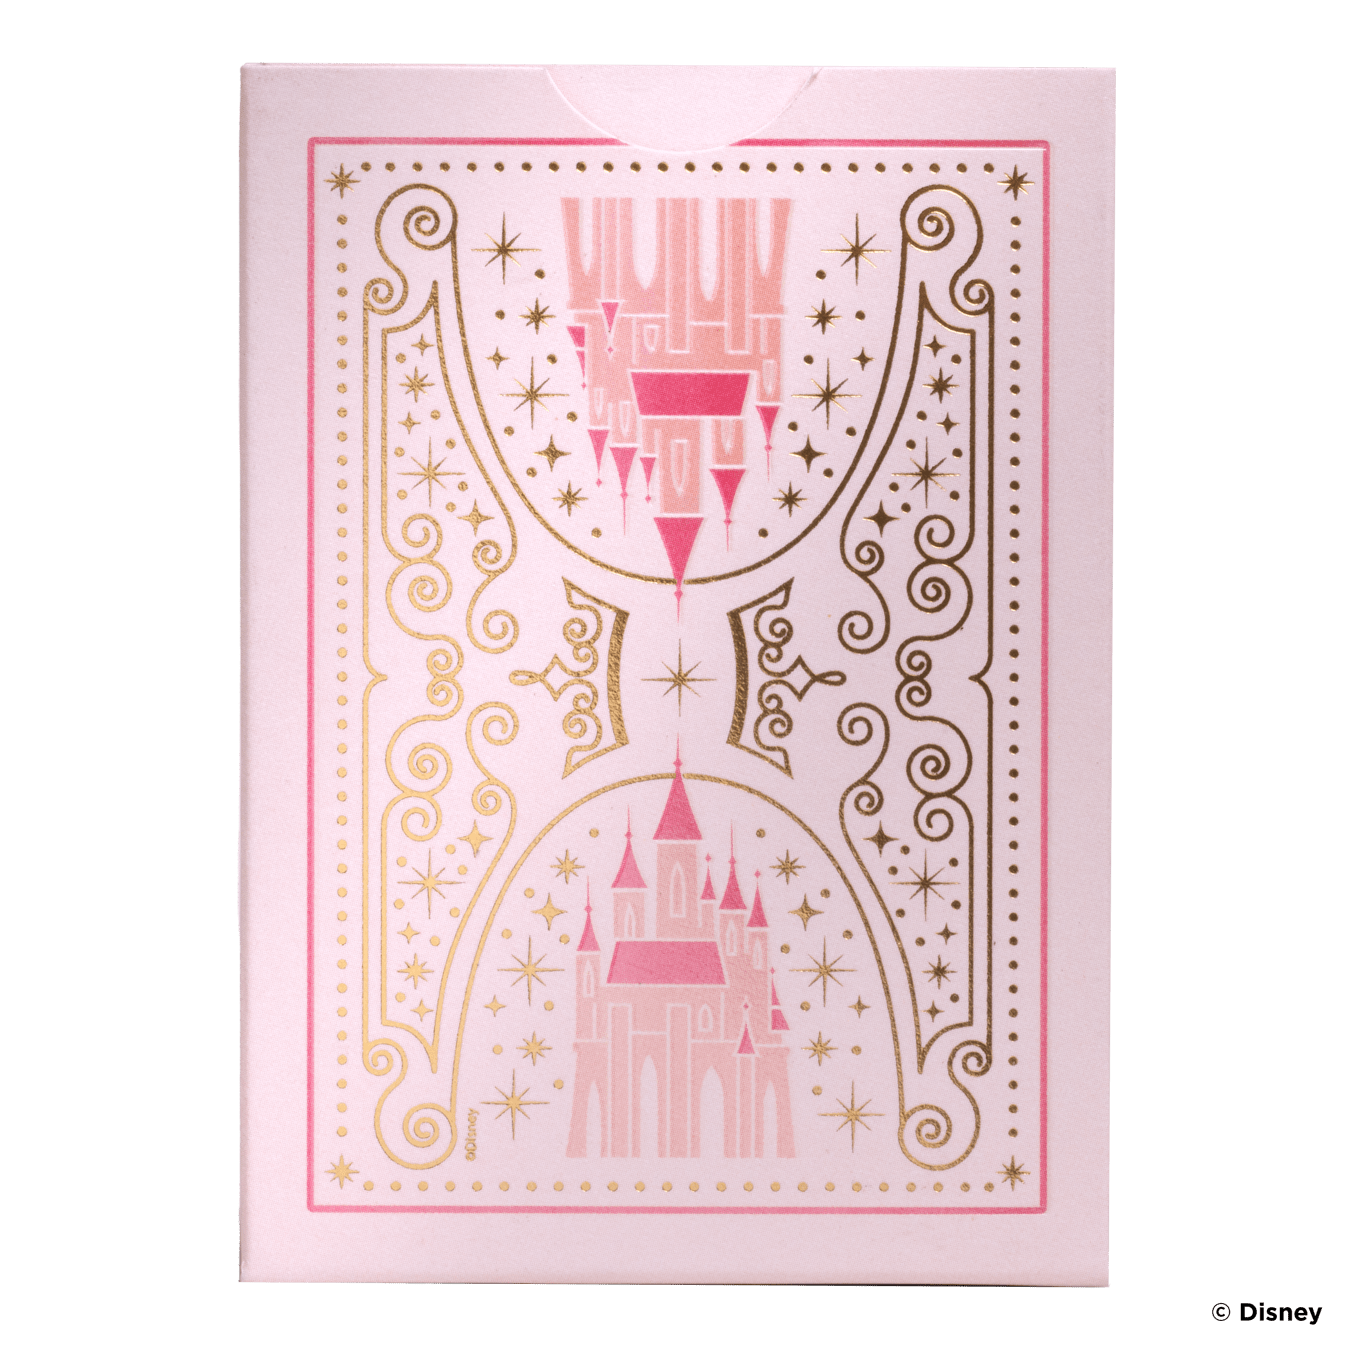 Bicycle Playing Cards: Disney Princess - Bards & Cards